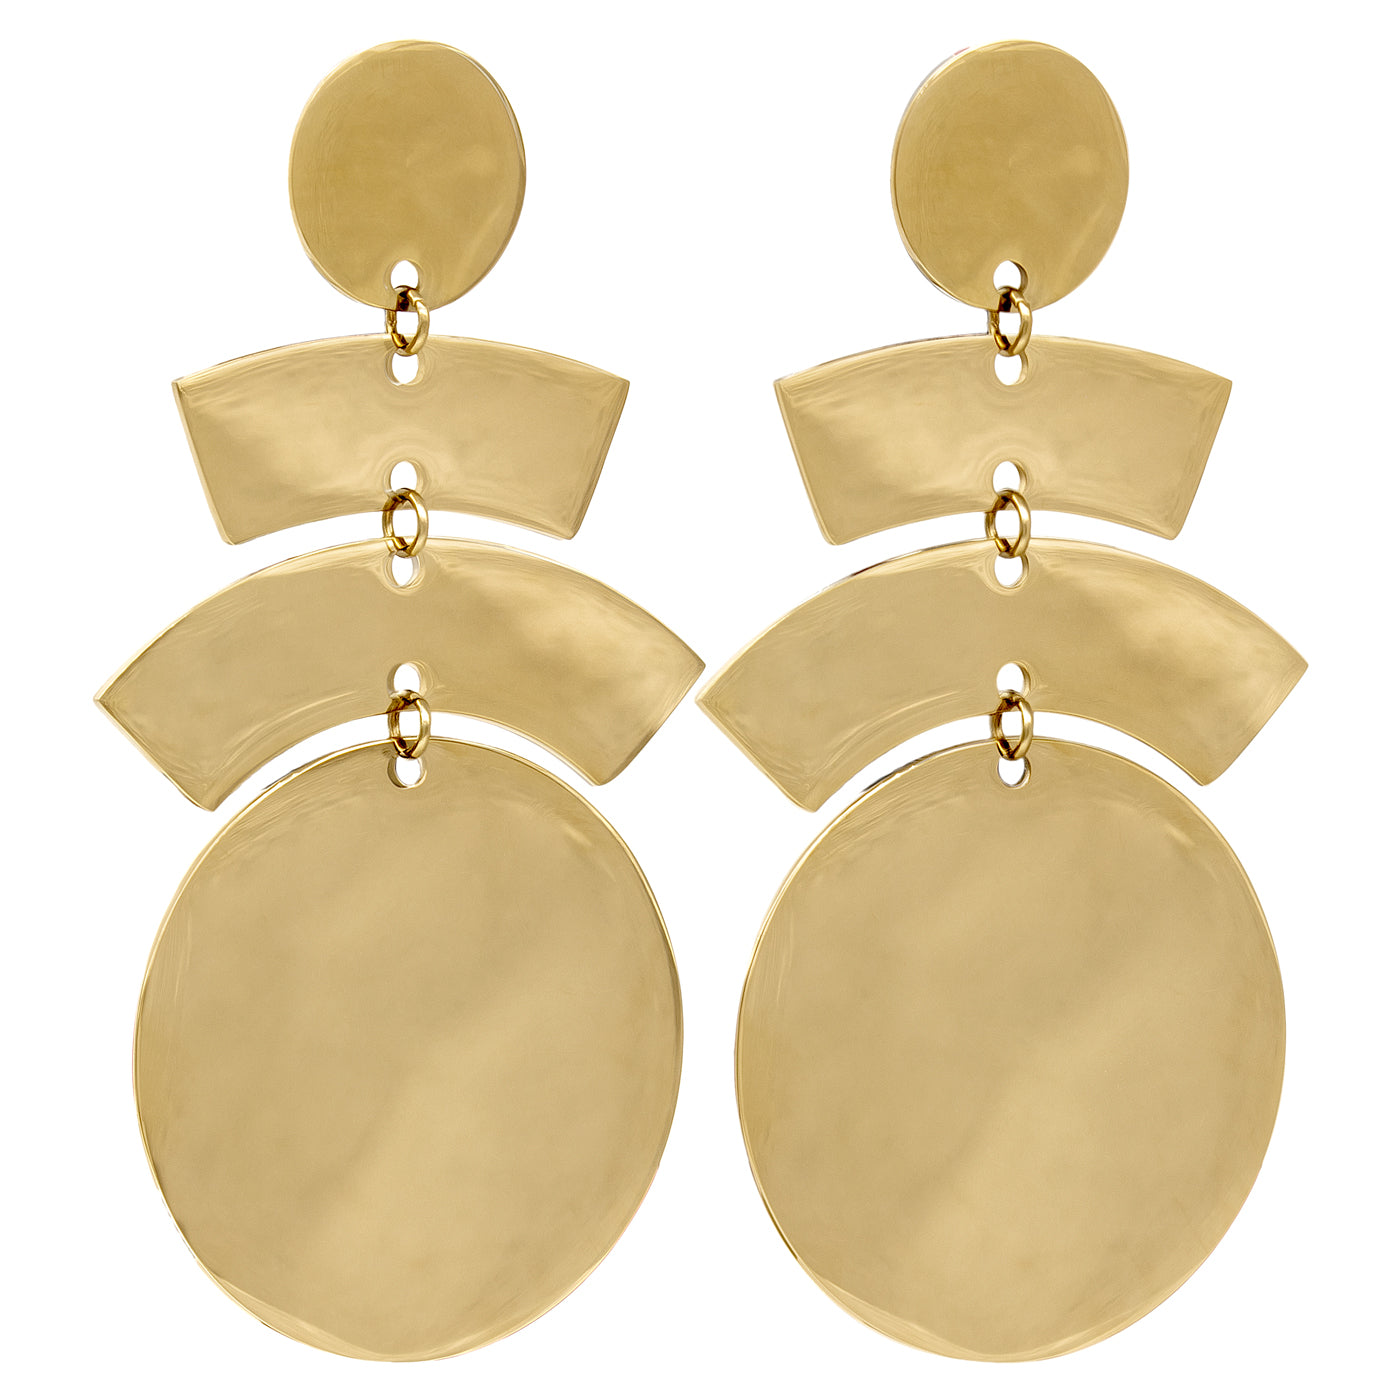 Georgian earrings